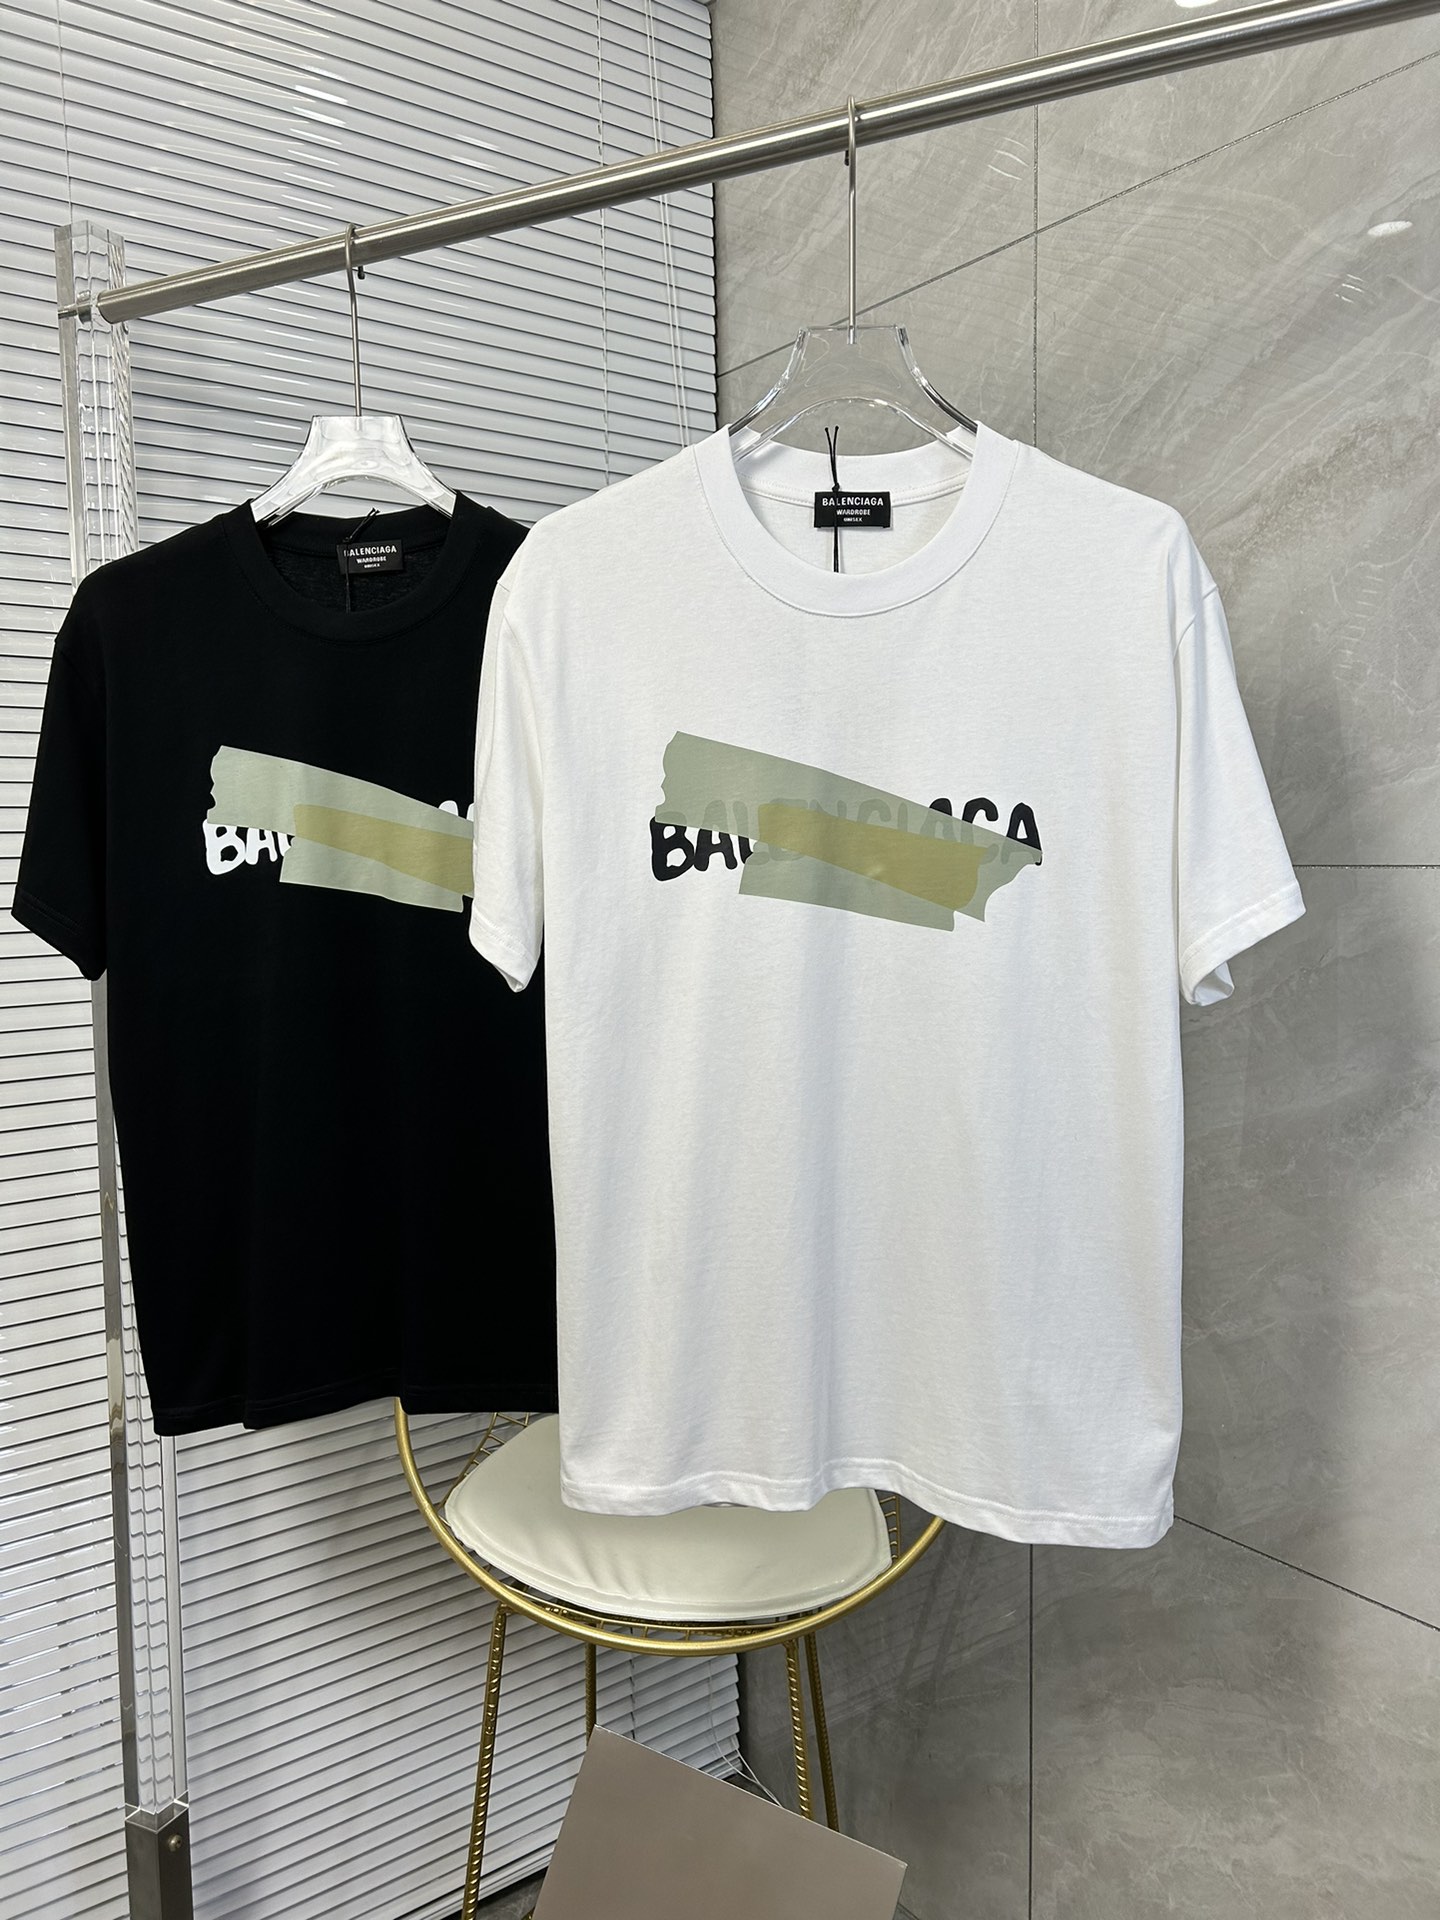 Balenciaga Buy Clothing T-Shirt Black White Printing Unisex Cotton Fashion Short Sleeve